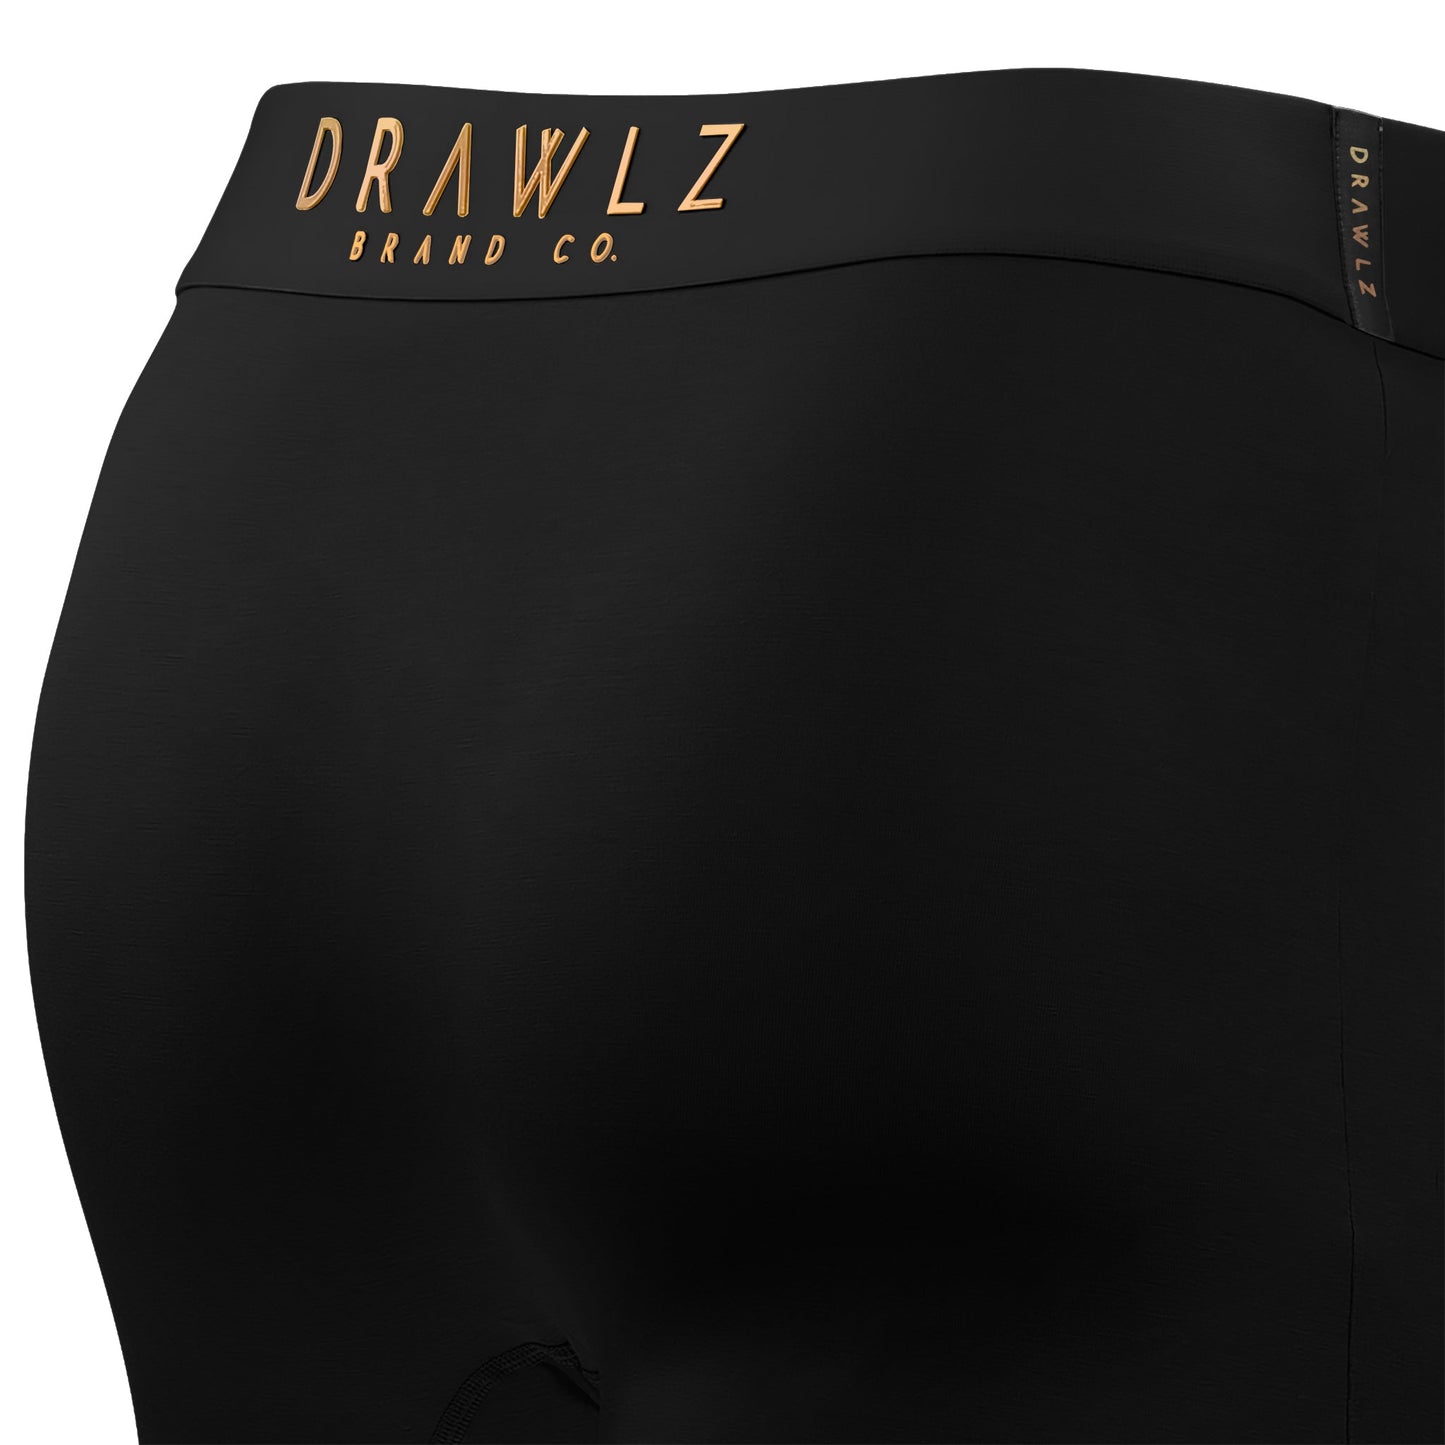 Drawlz Brand Co. , LLC Originalz Gold Anniversary Edition